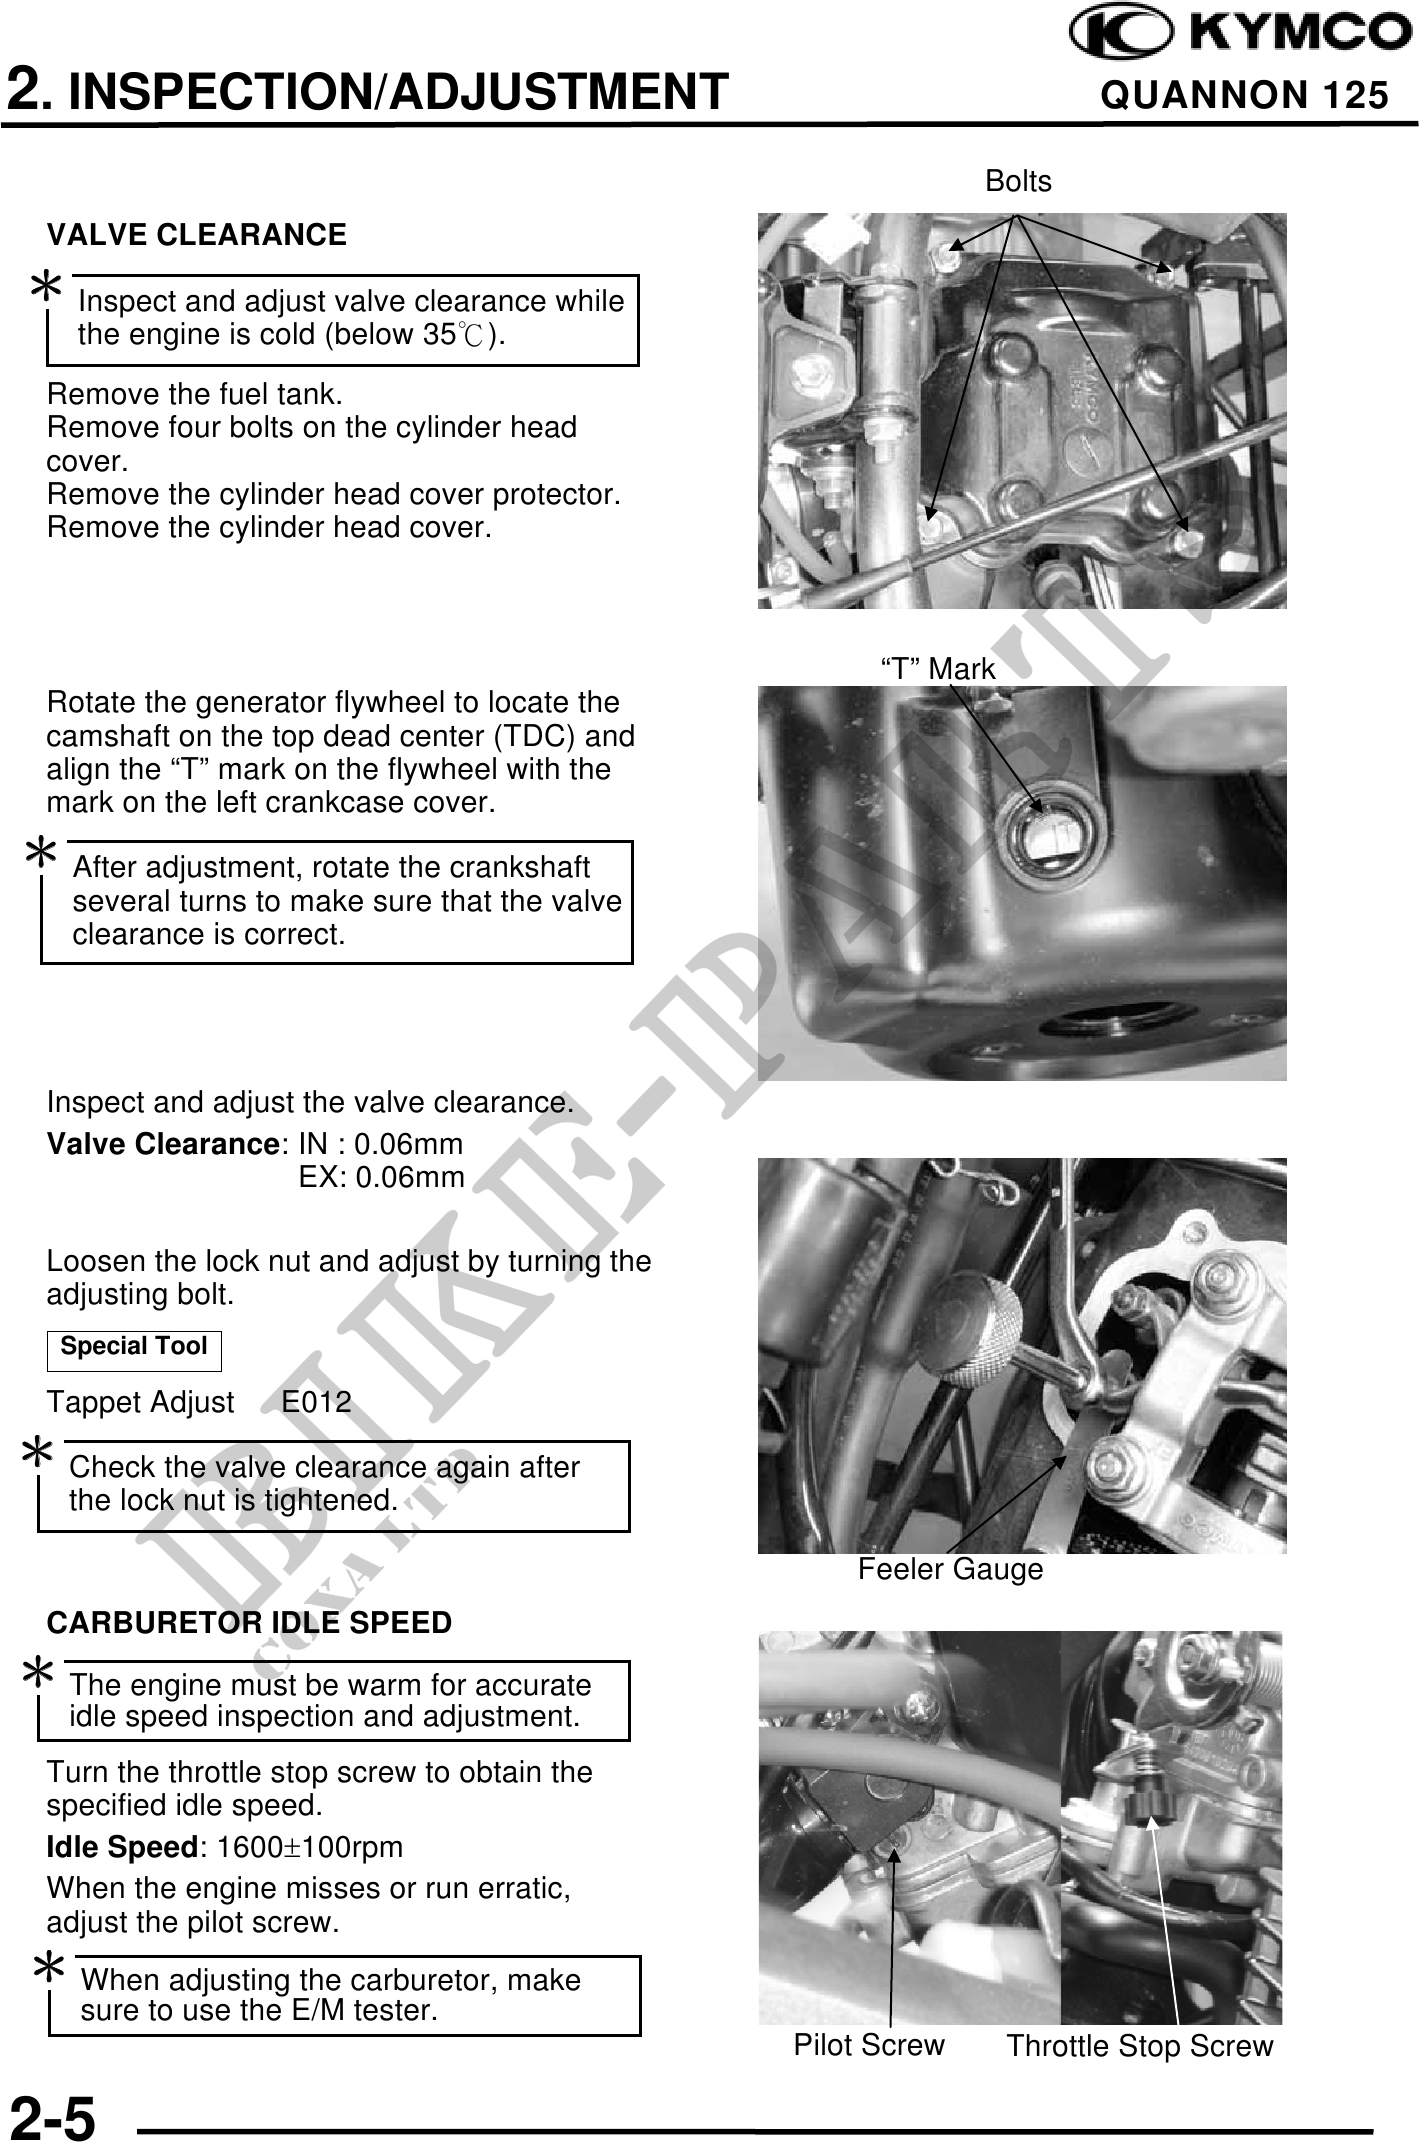 Quannon 125 Инструкция по эксплуатации мотоцикла Kymco Quannon 125 стр 1